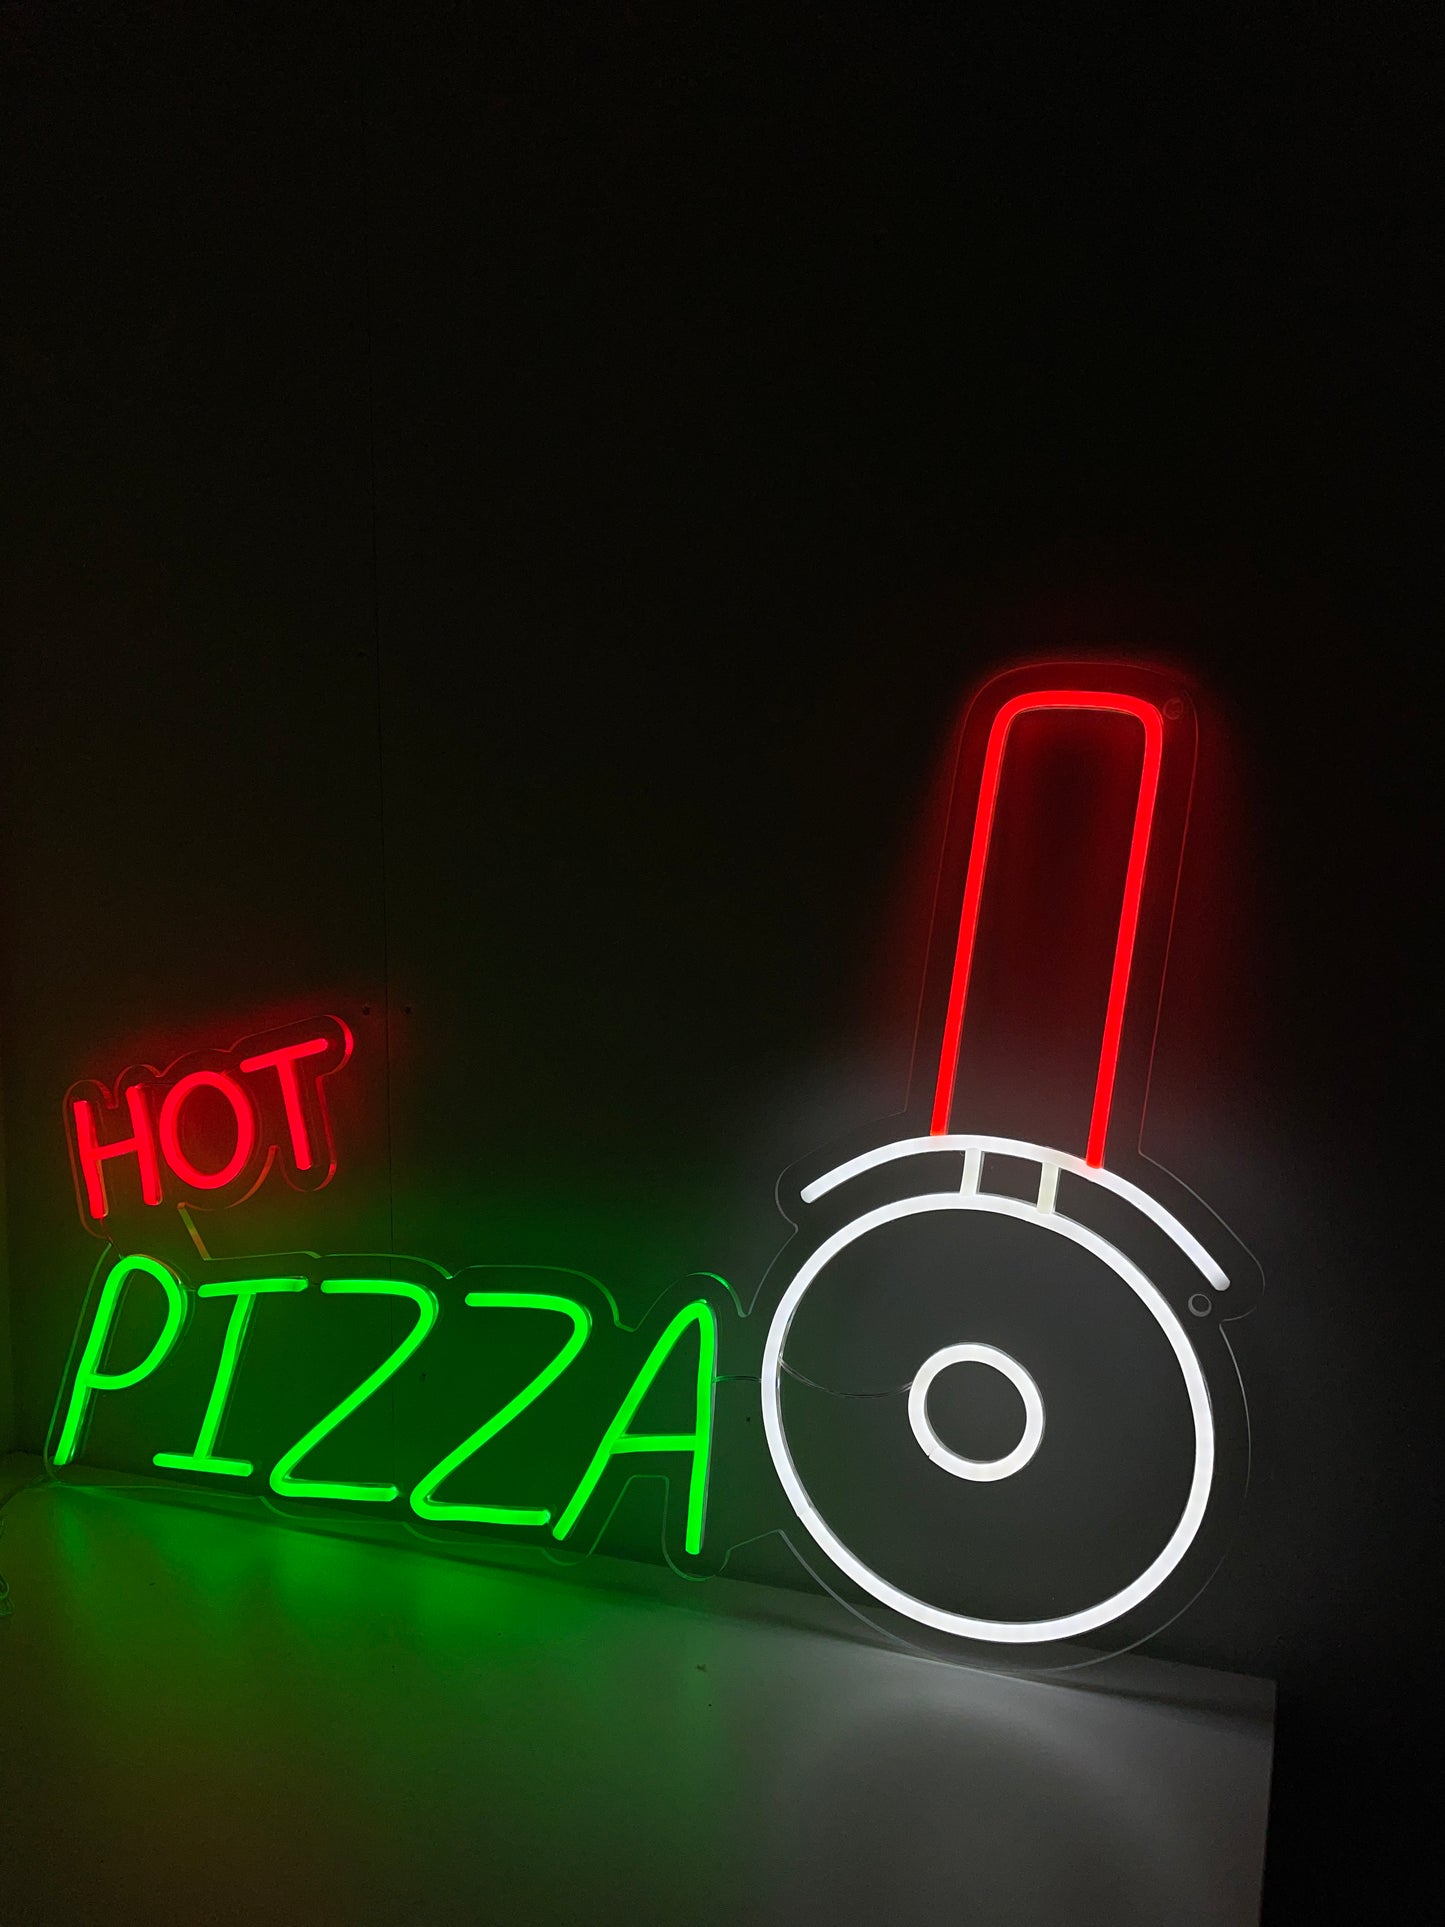 Hot Pizza Neon Sign - The Art Neon